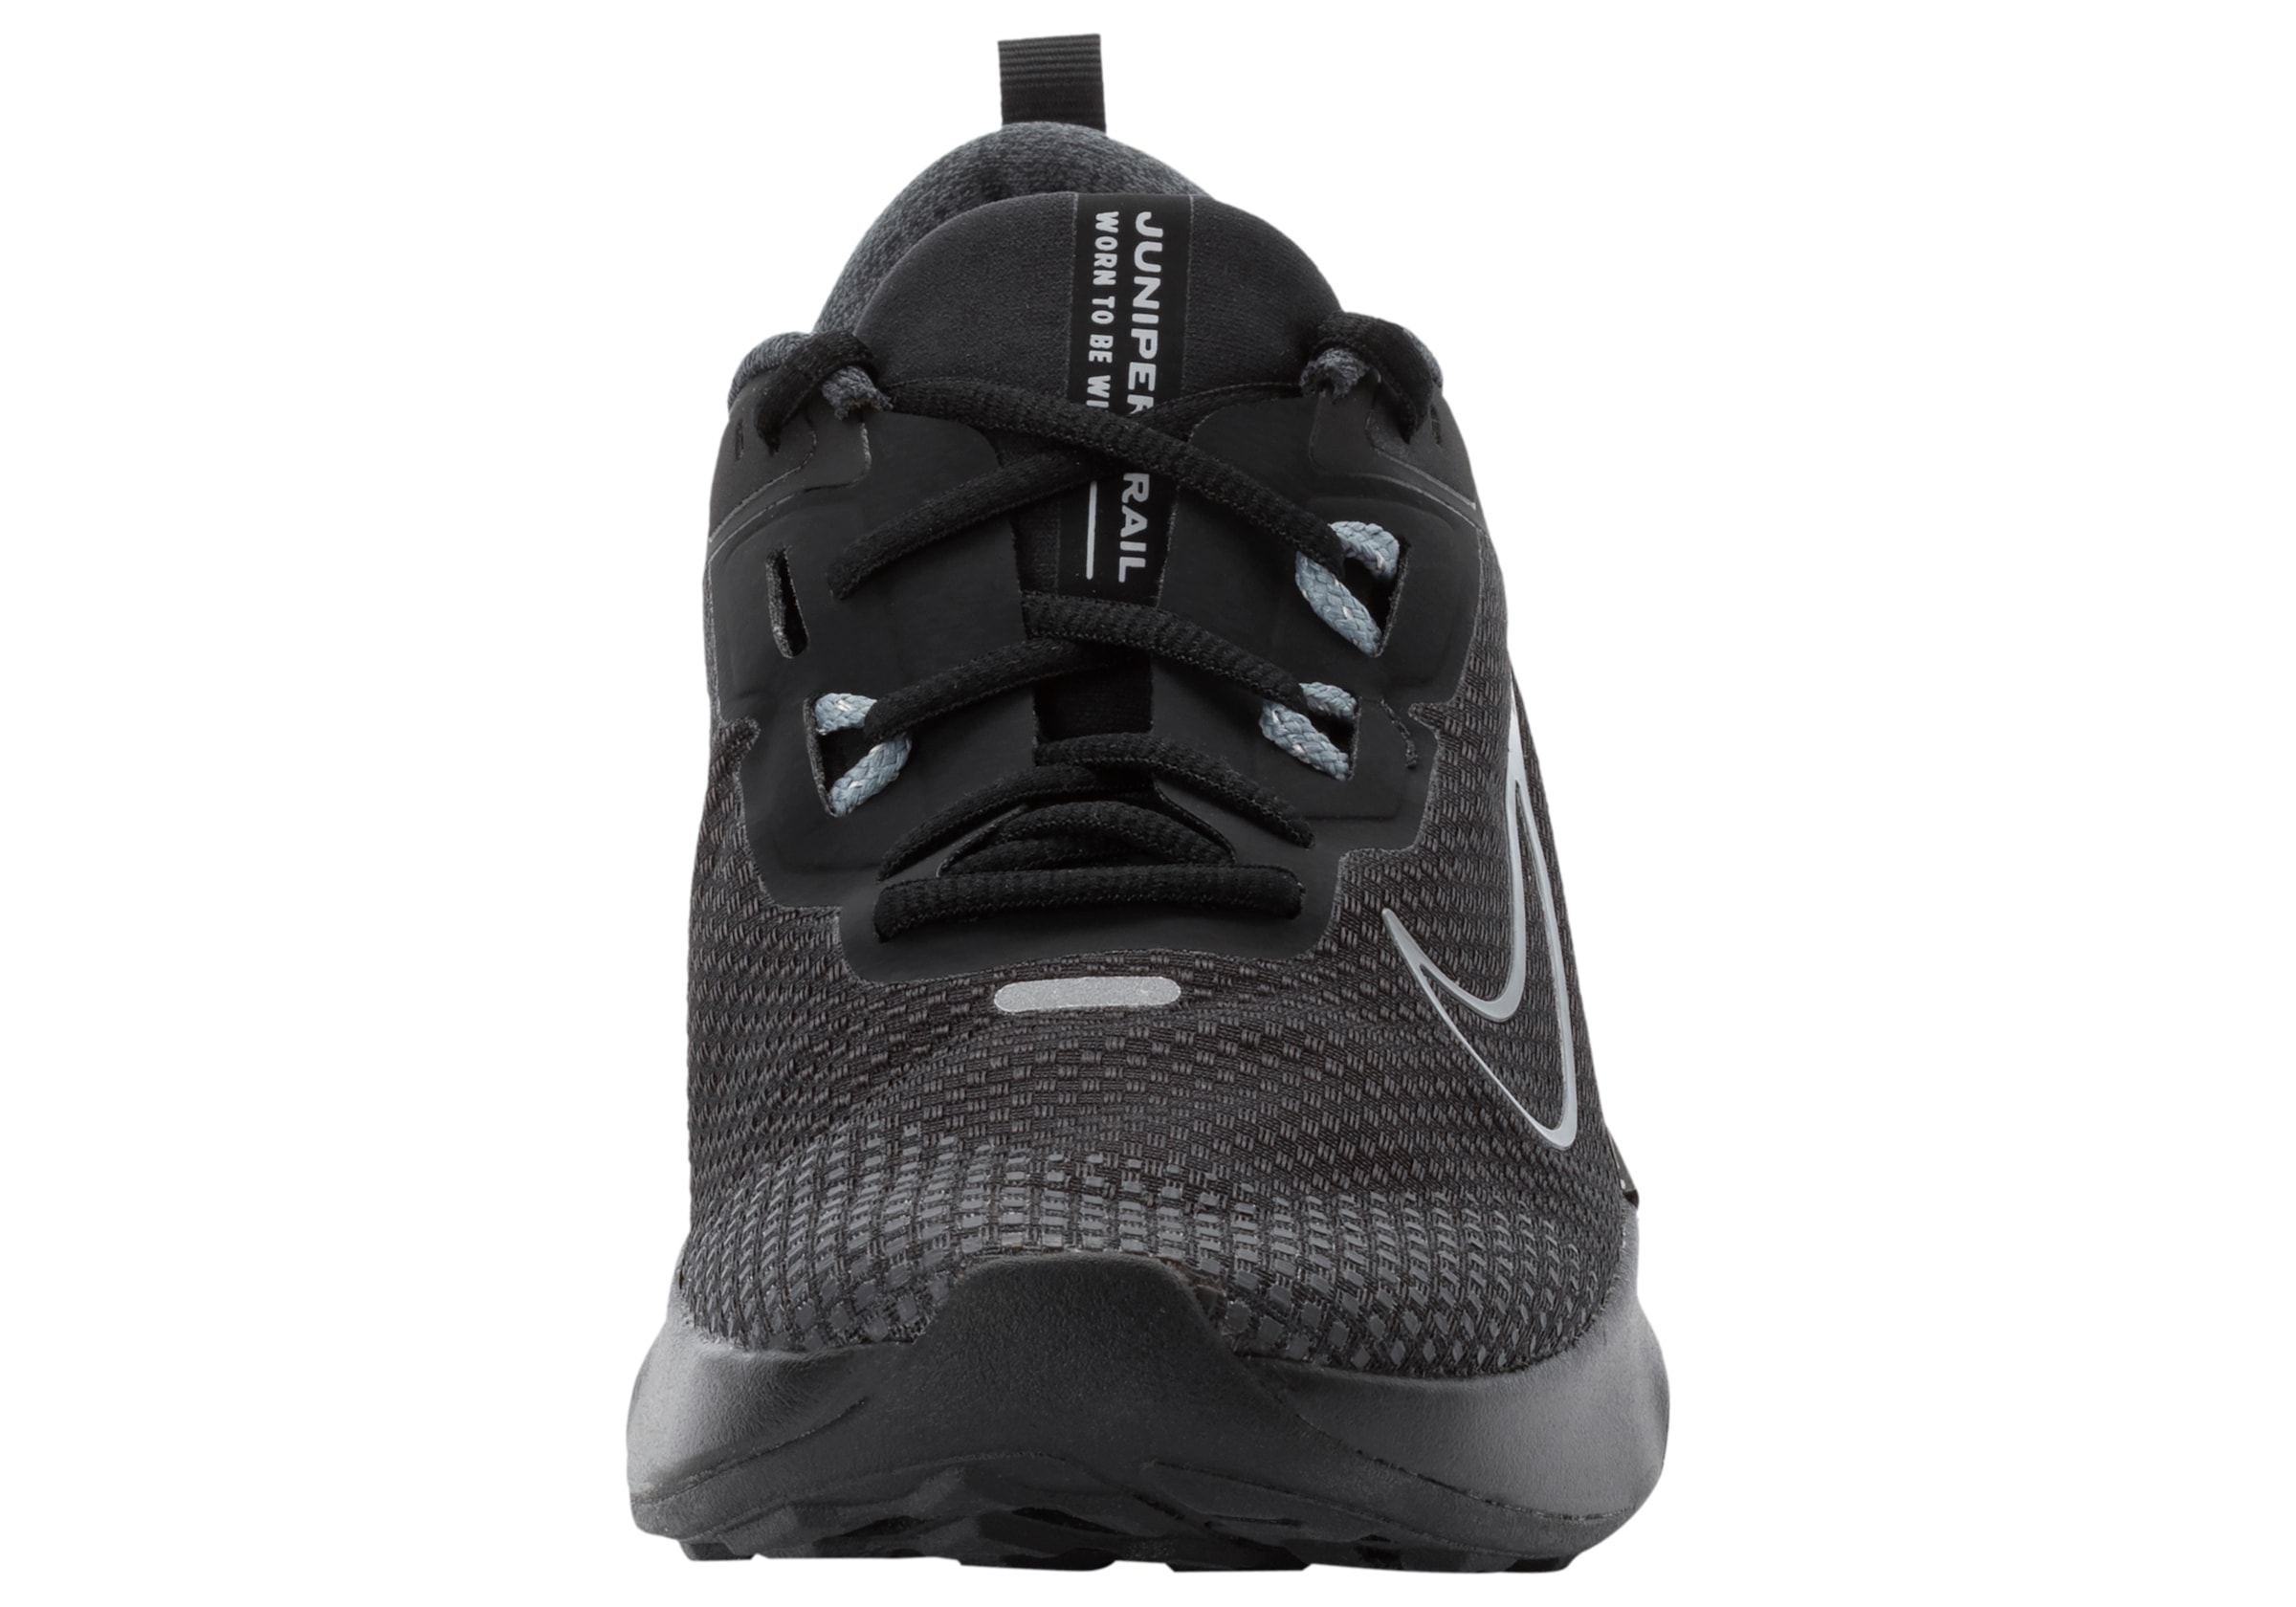 Nike Laufschuh »JUNIPER TRAIL 2 GORE-TEX WATERPROO«, wasserdicht